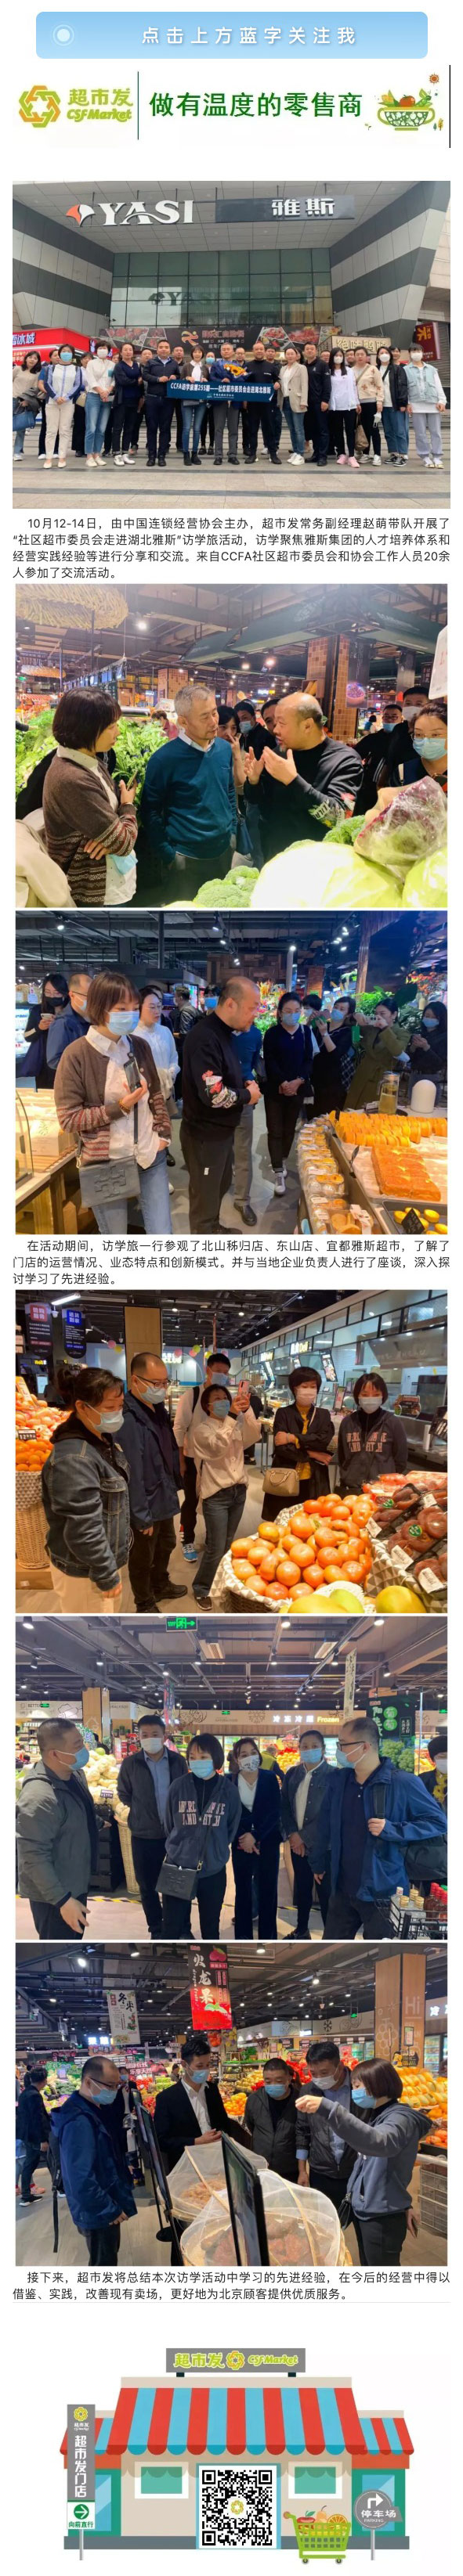 CCFA访学旅255期——社区超市委员会走进湖北雅斯-.jpg